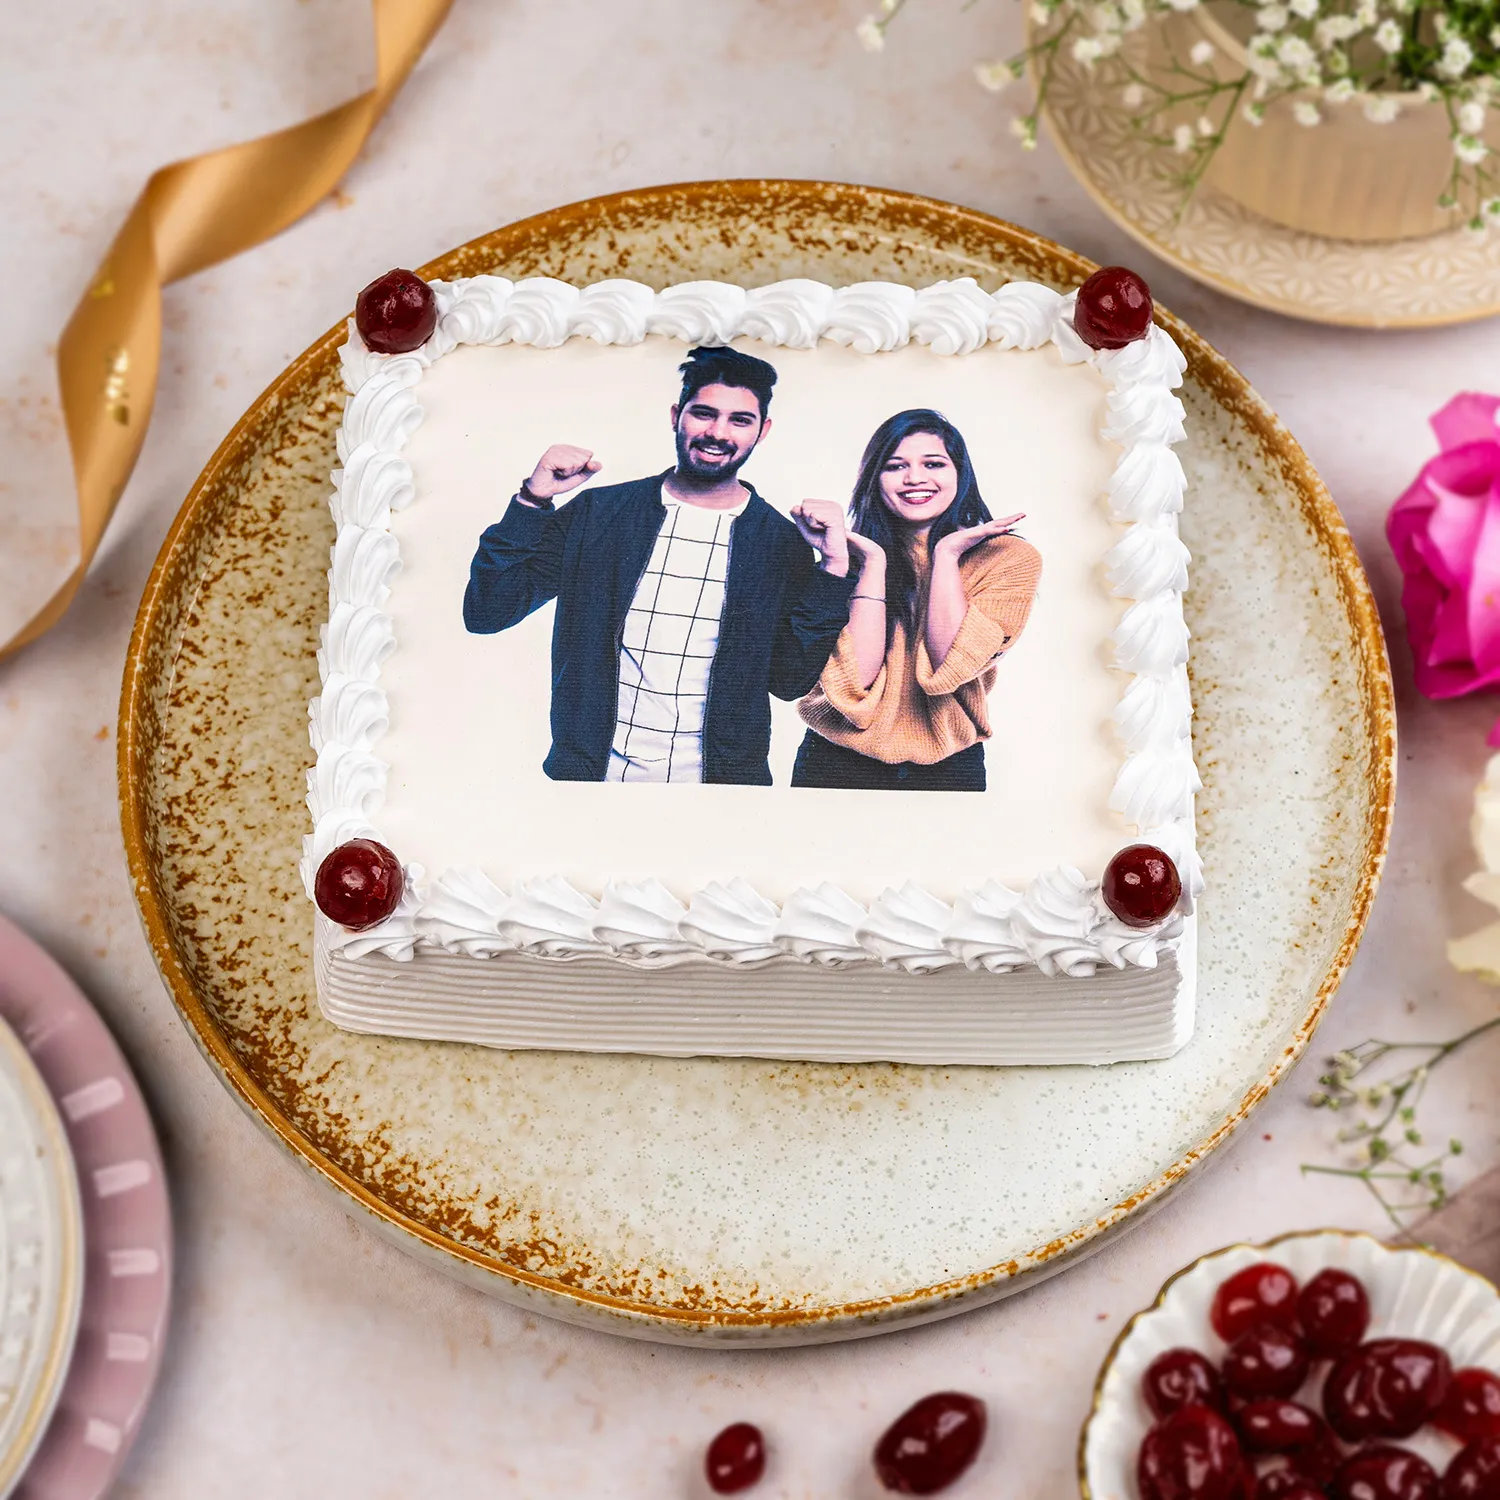 Happy Wedding Anniversary Cake - 2 KG